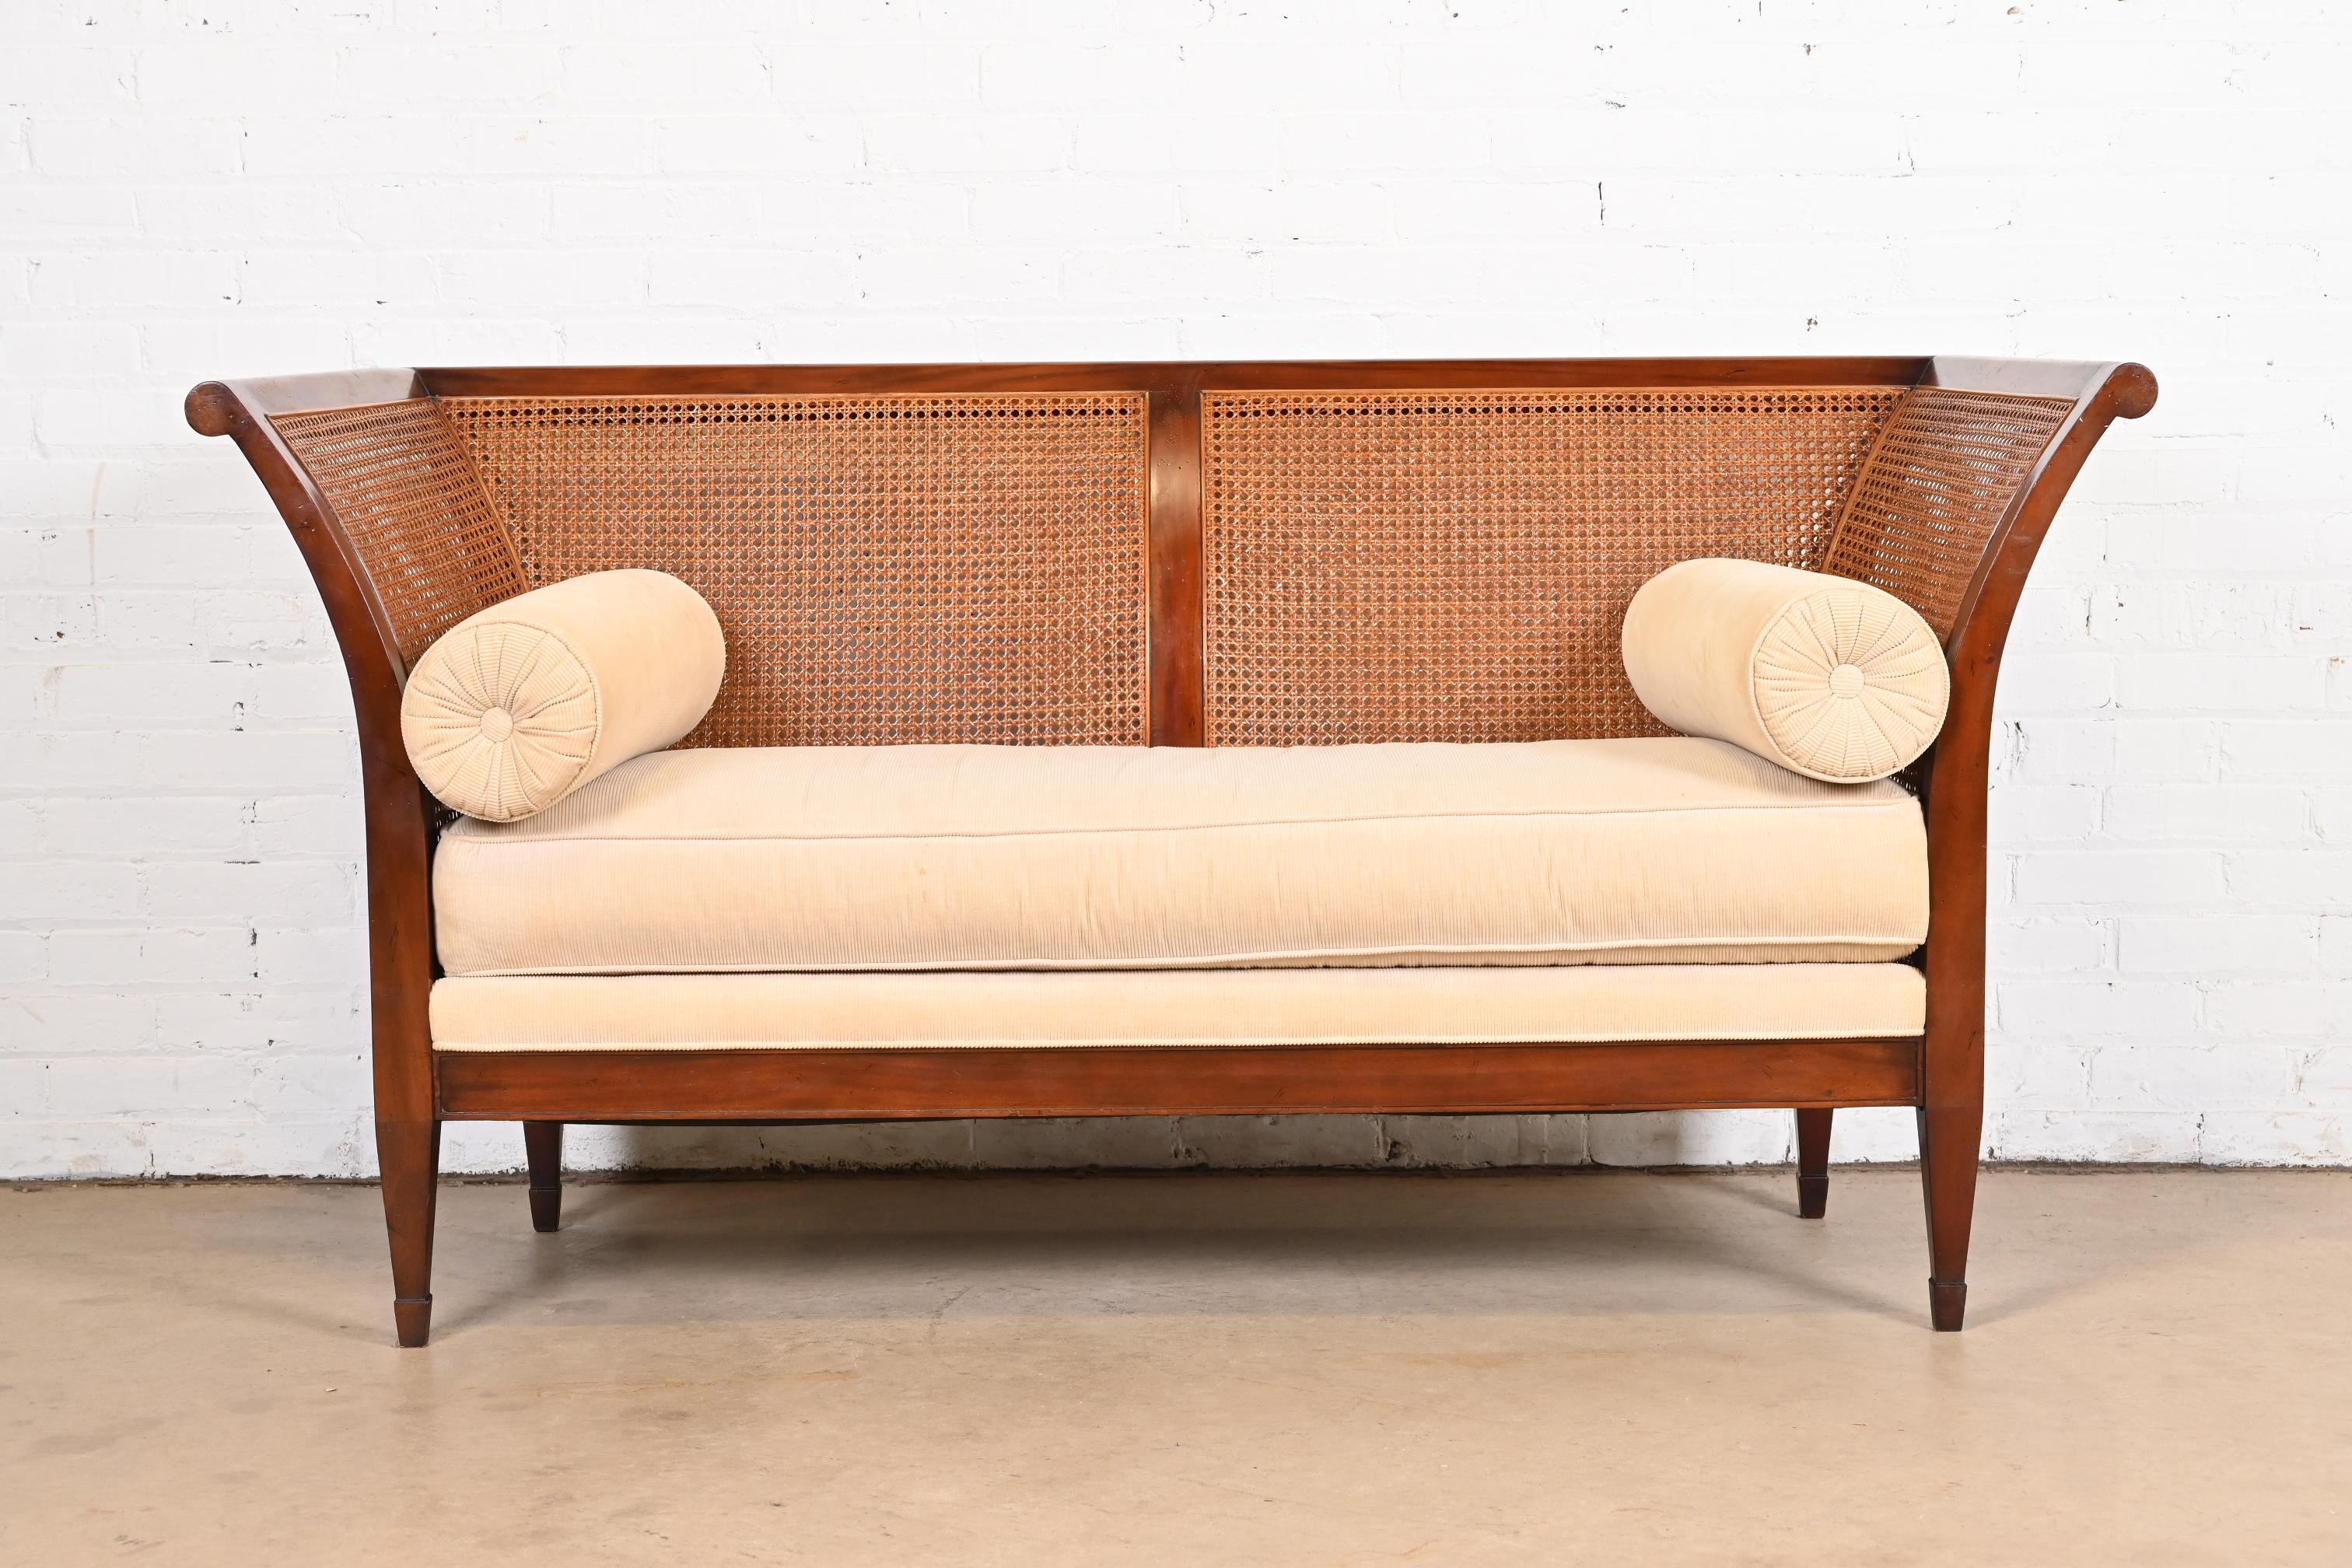 An outstanding Regency style sofa or settee

By Baker Furniture, 